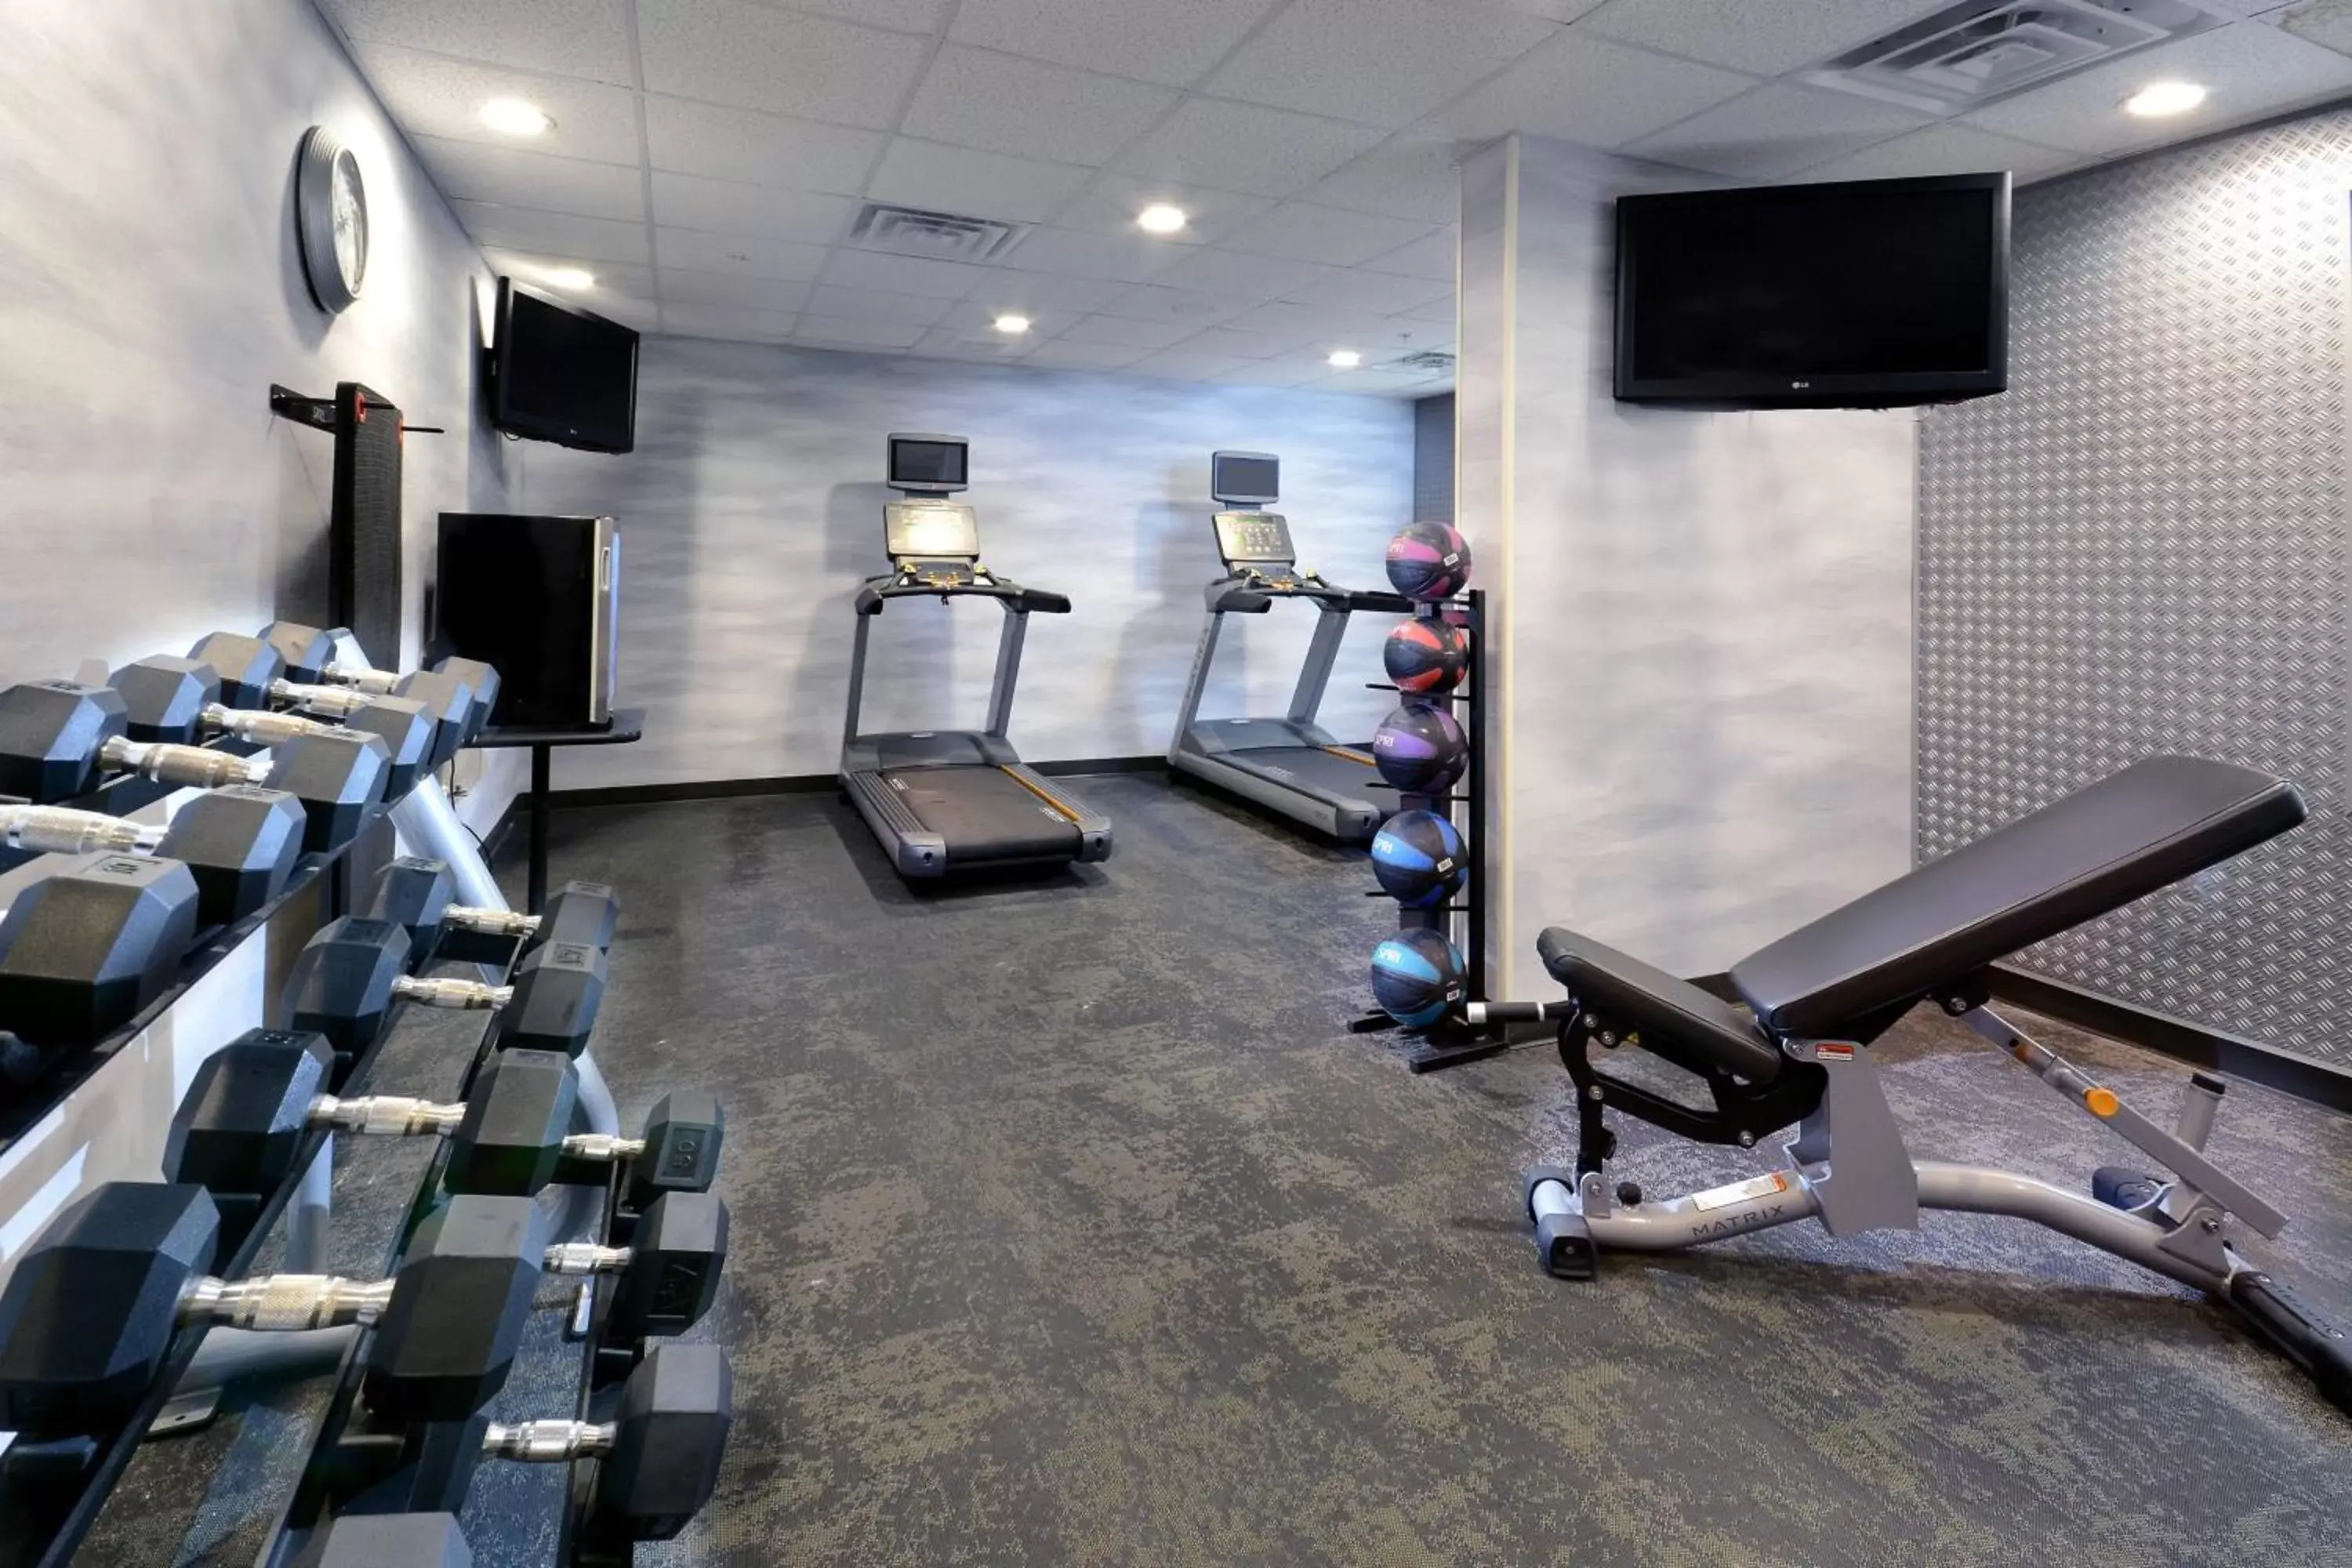 Fitness centre/facilities, Fitness Center/Facilities in Fairfield Inn Greensboro Airport